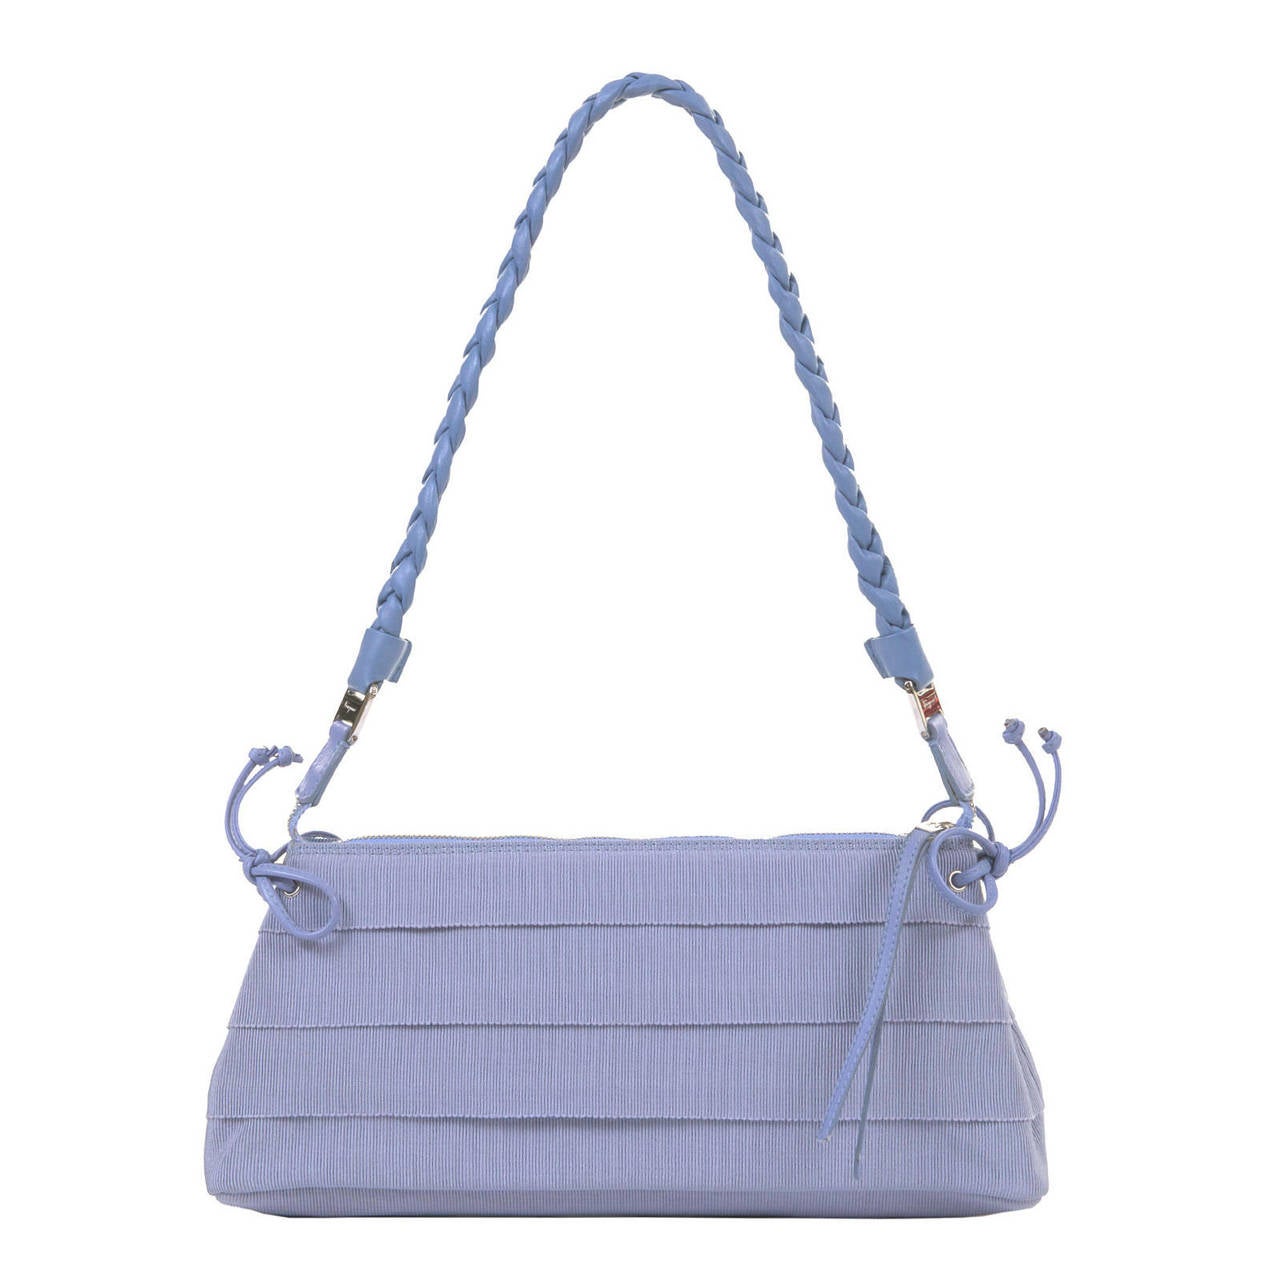 A Cute Ferragamo Clutch/Shoulder Bag in Lavender Toile & Matching Leather Trim For Sale